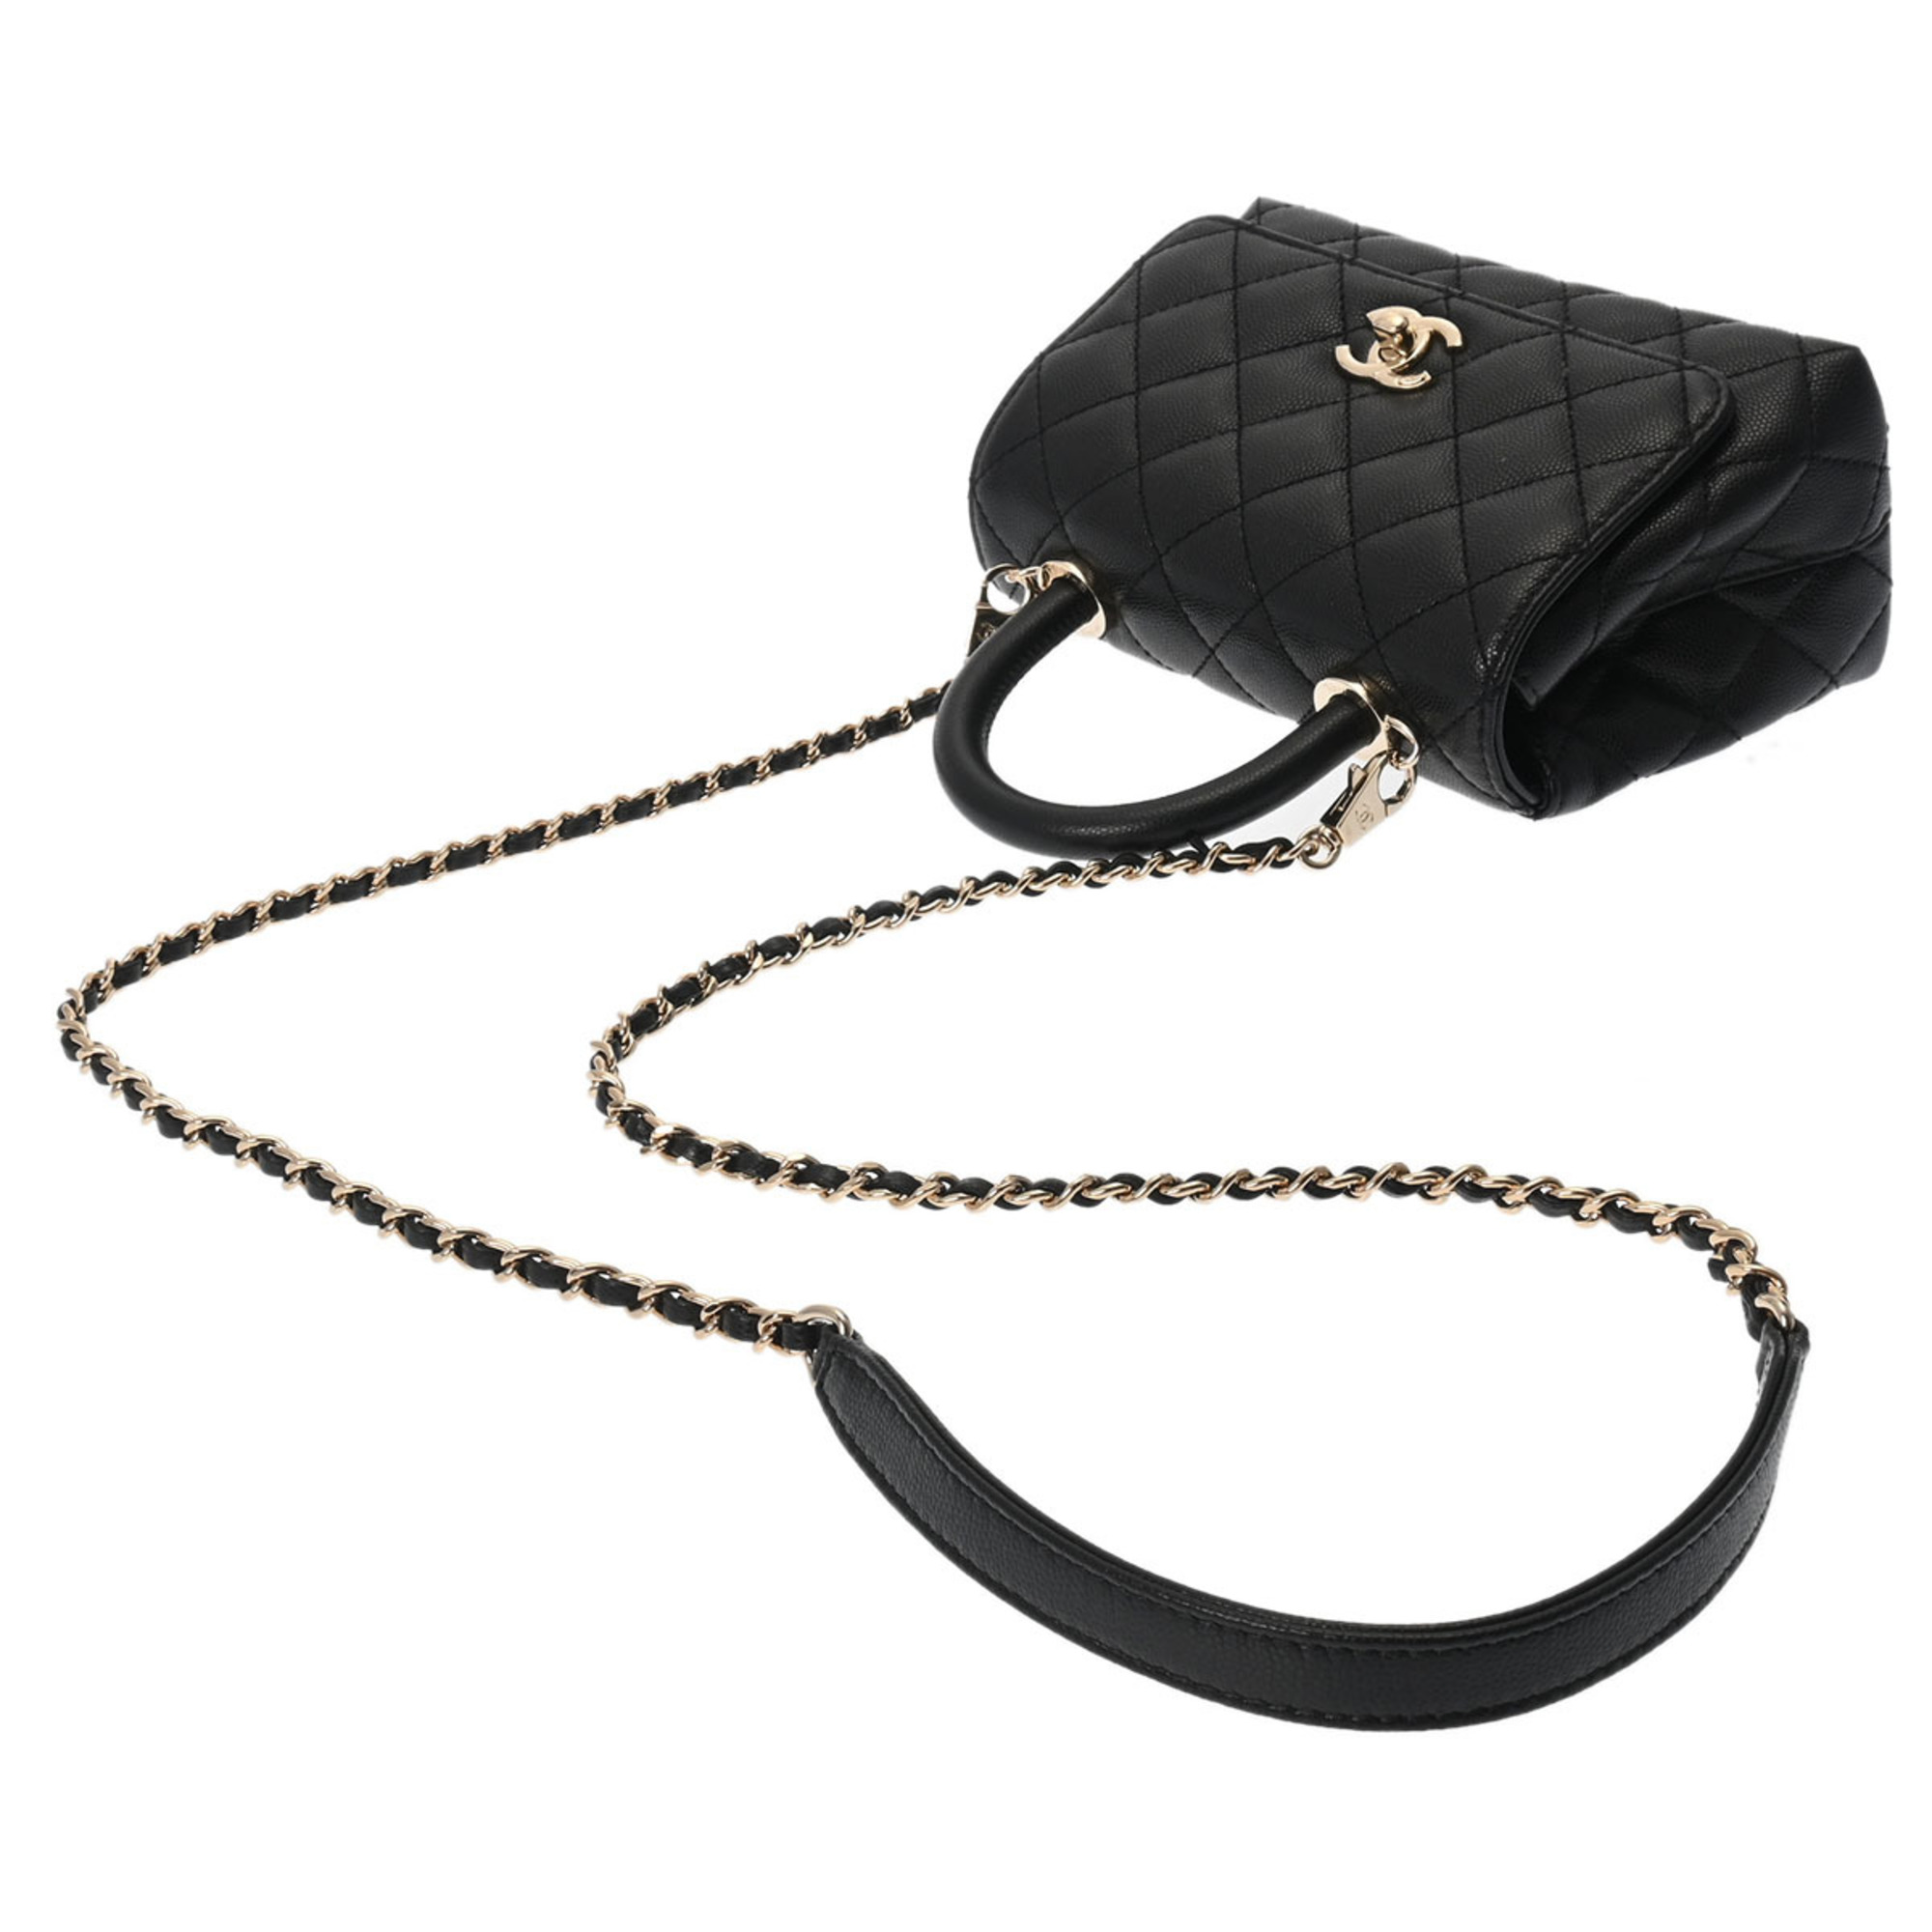 Chanel AS2215 Women's Caviar Leather Handbag Black,Champagne,Champagne Gold